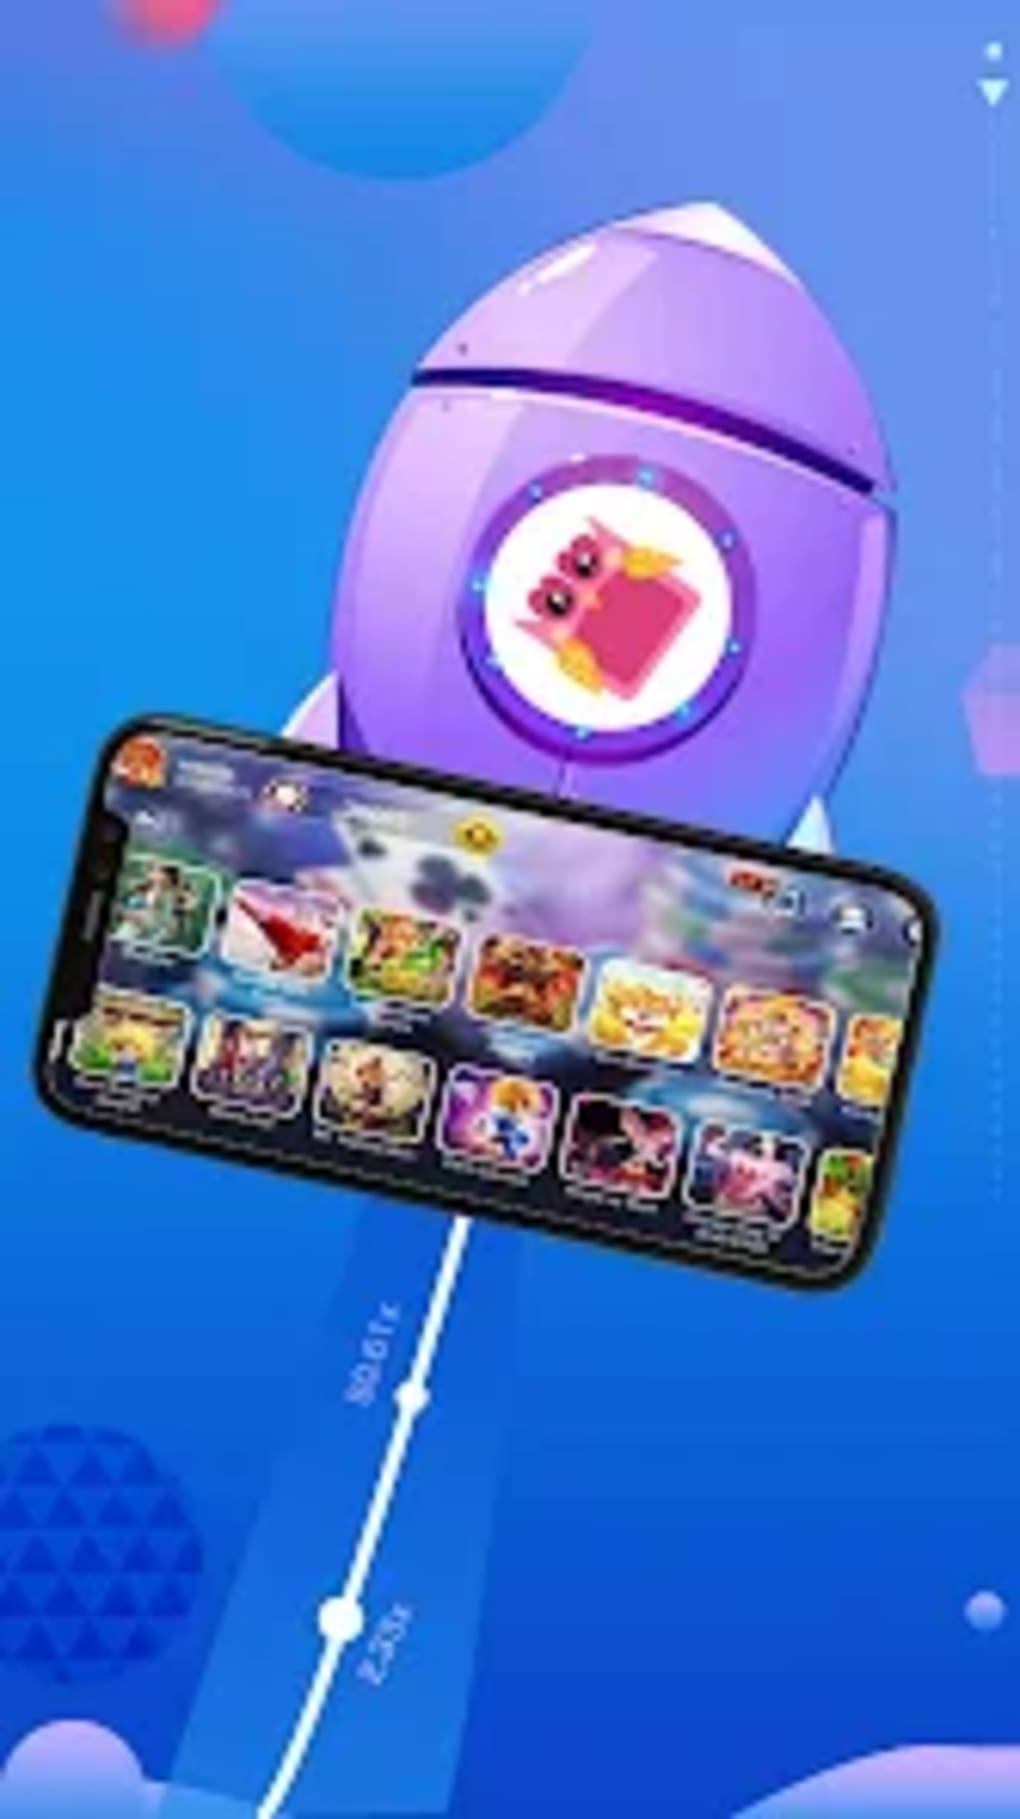 Crash slot Smash Casino club for Android - Download